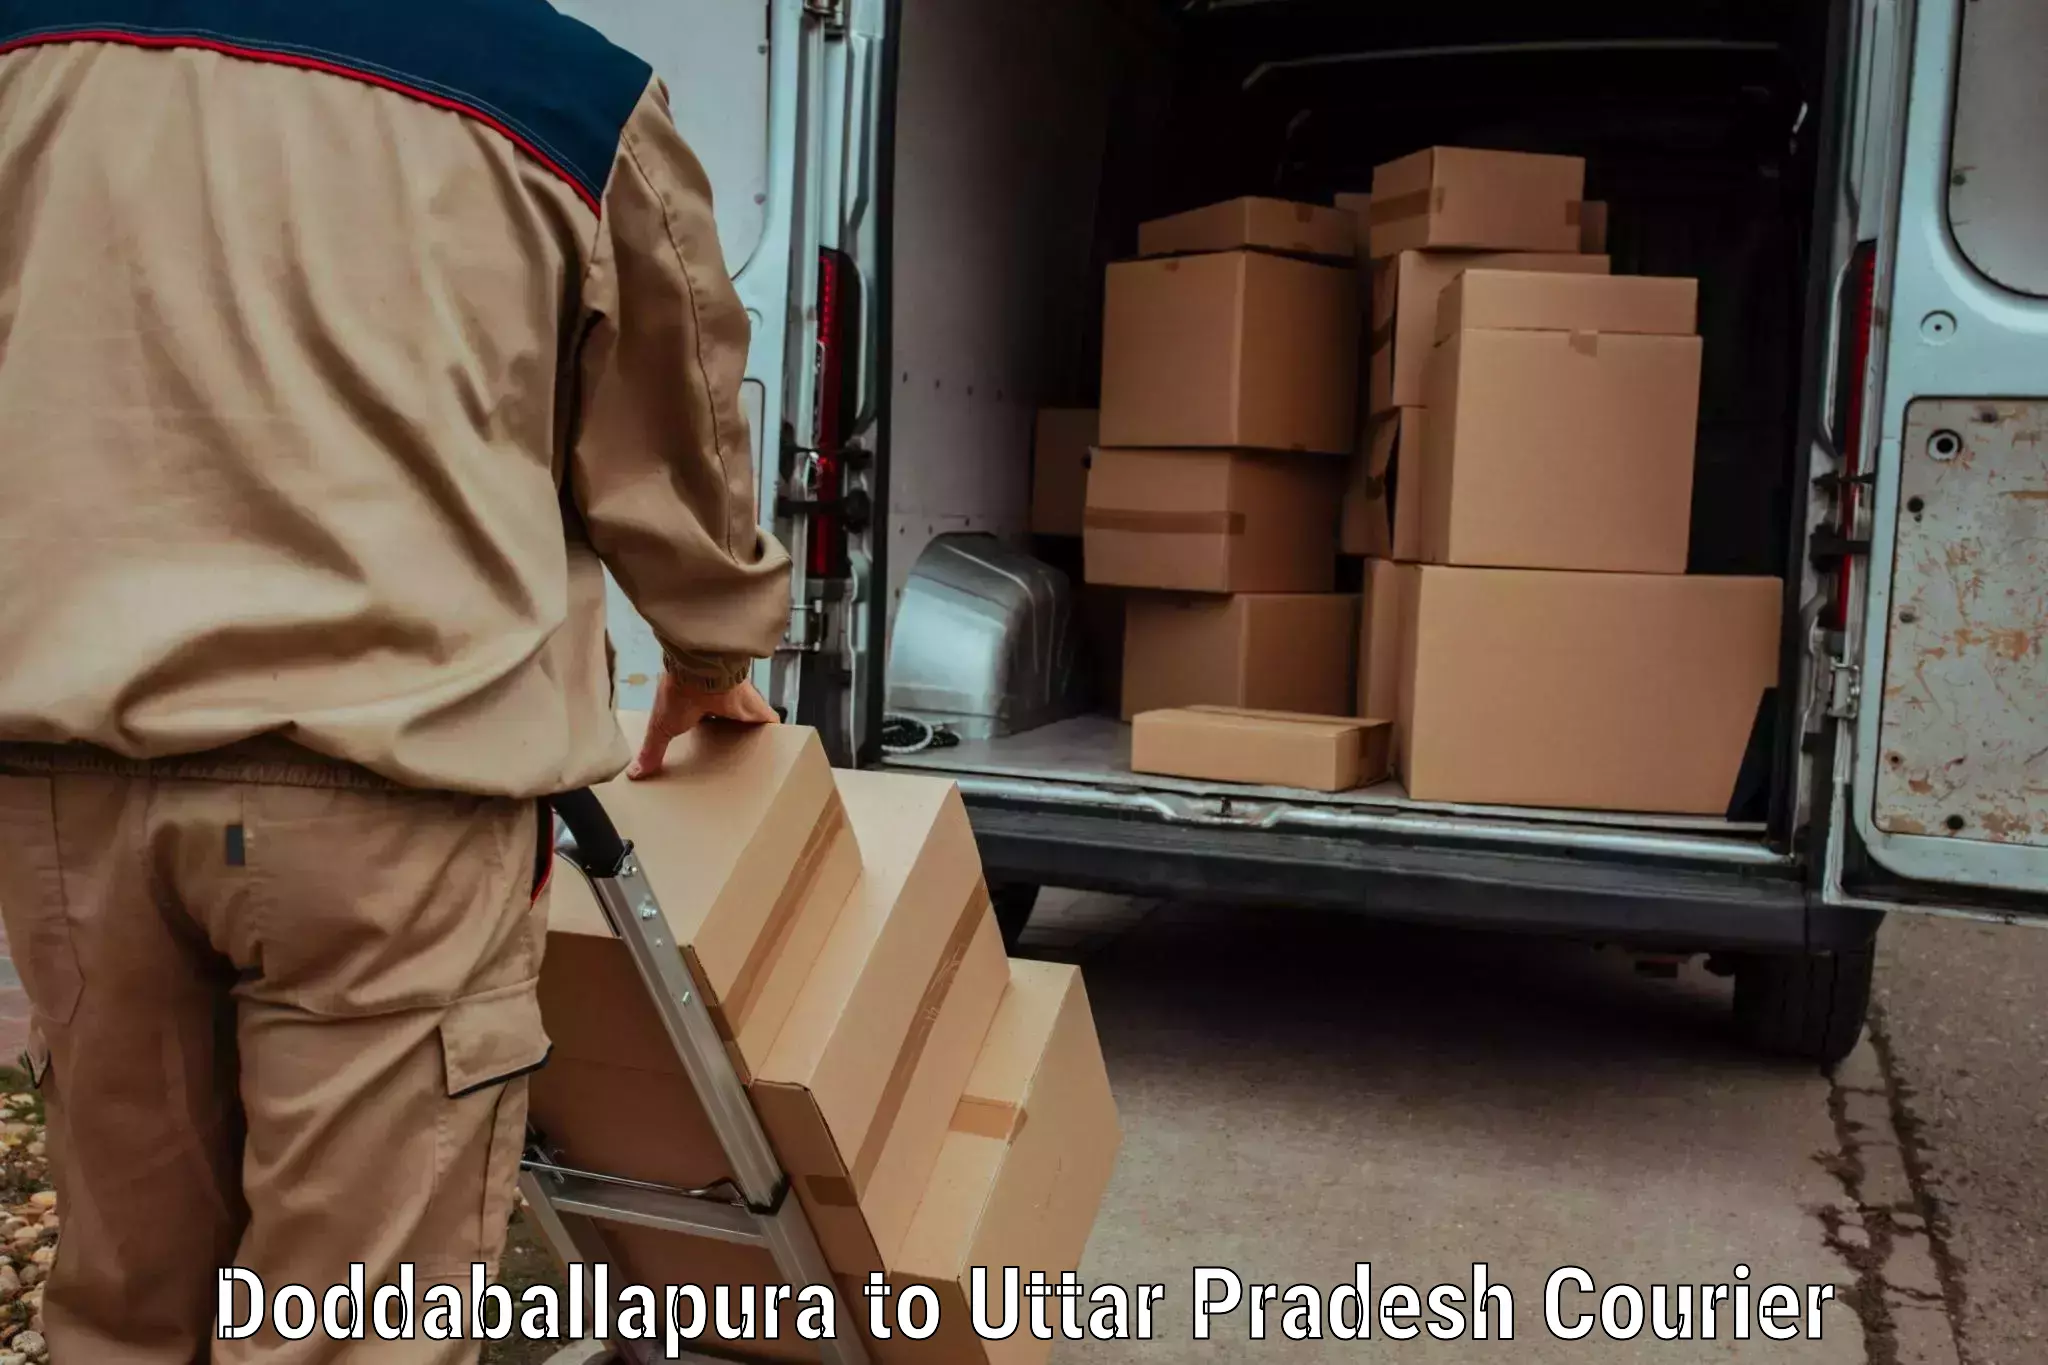 Door-to-door shipment in Doddaballapura to Cholapur